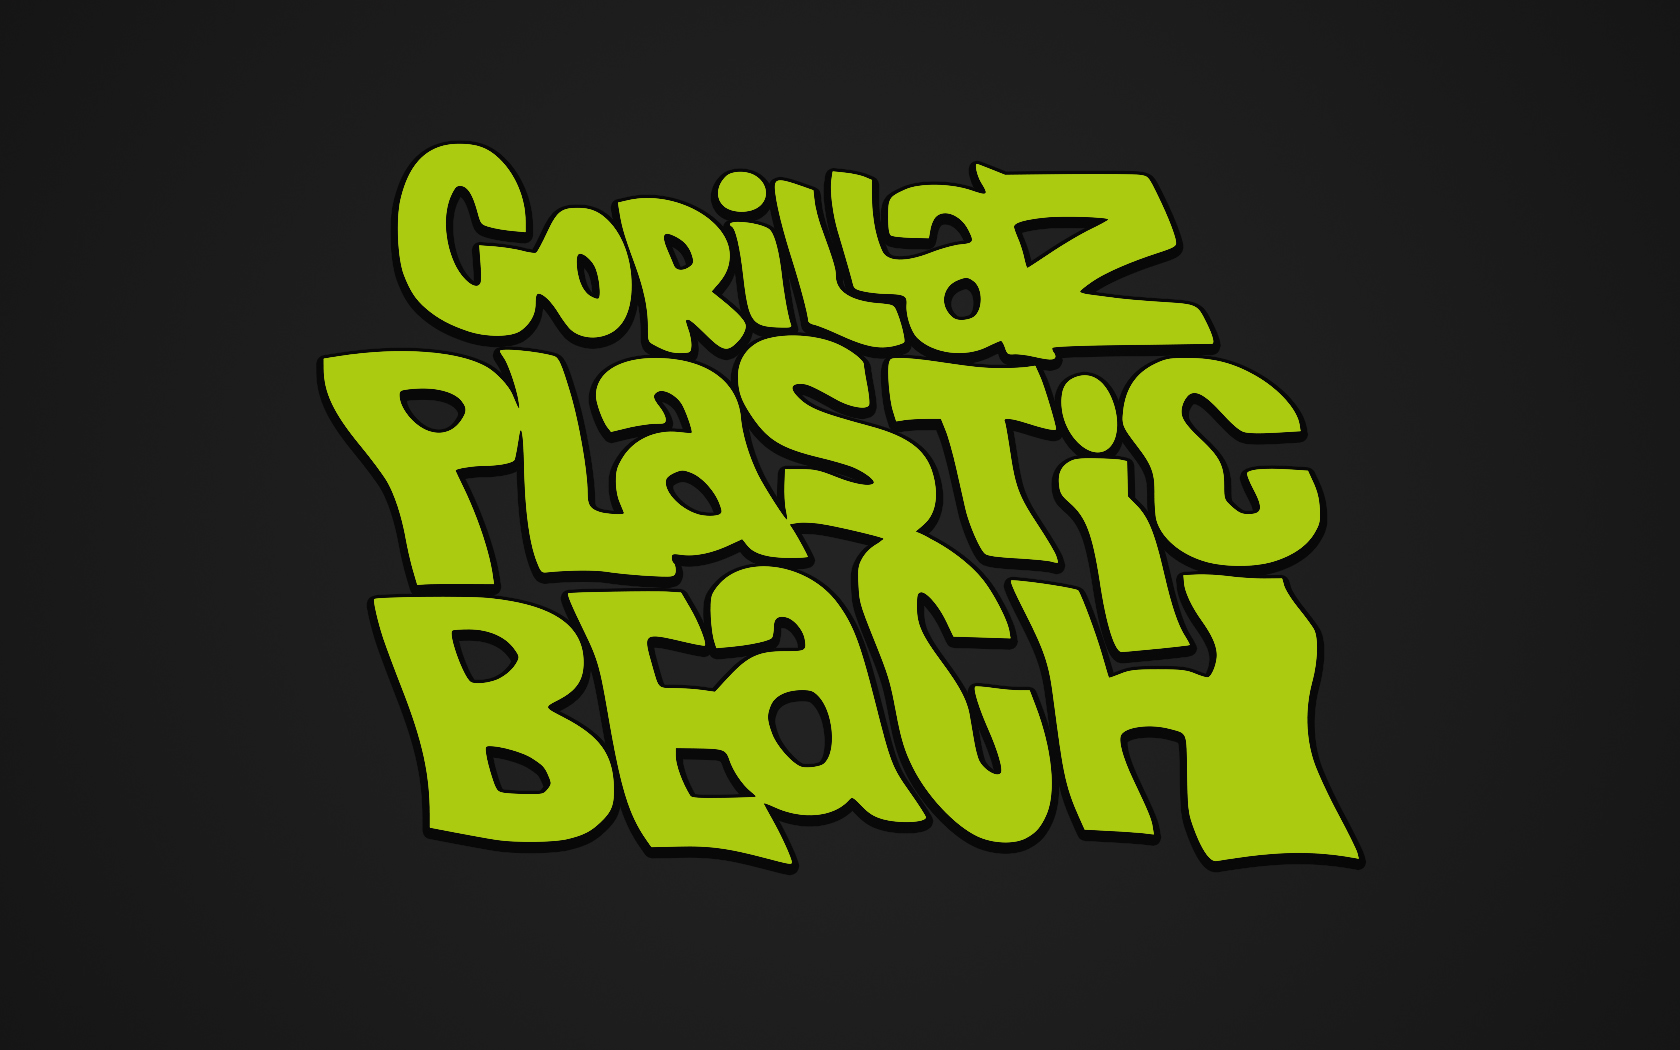 Gorillaz Plastic Beach Logo - HD Wallpaper 